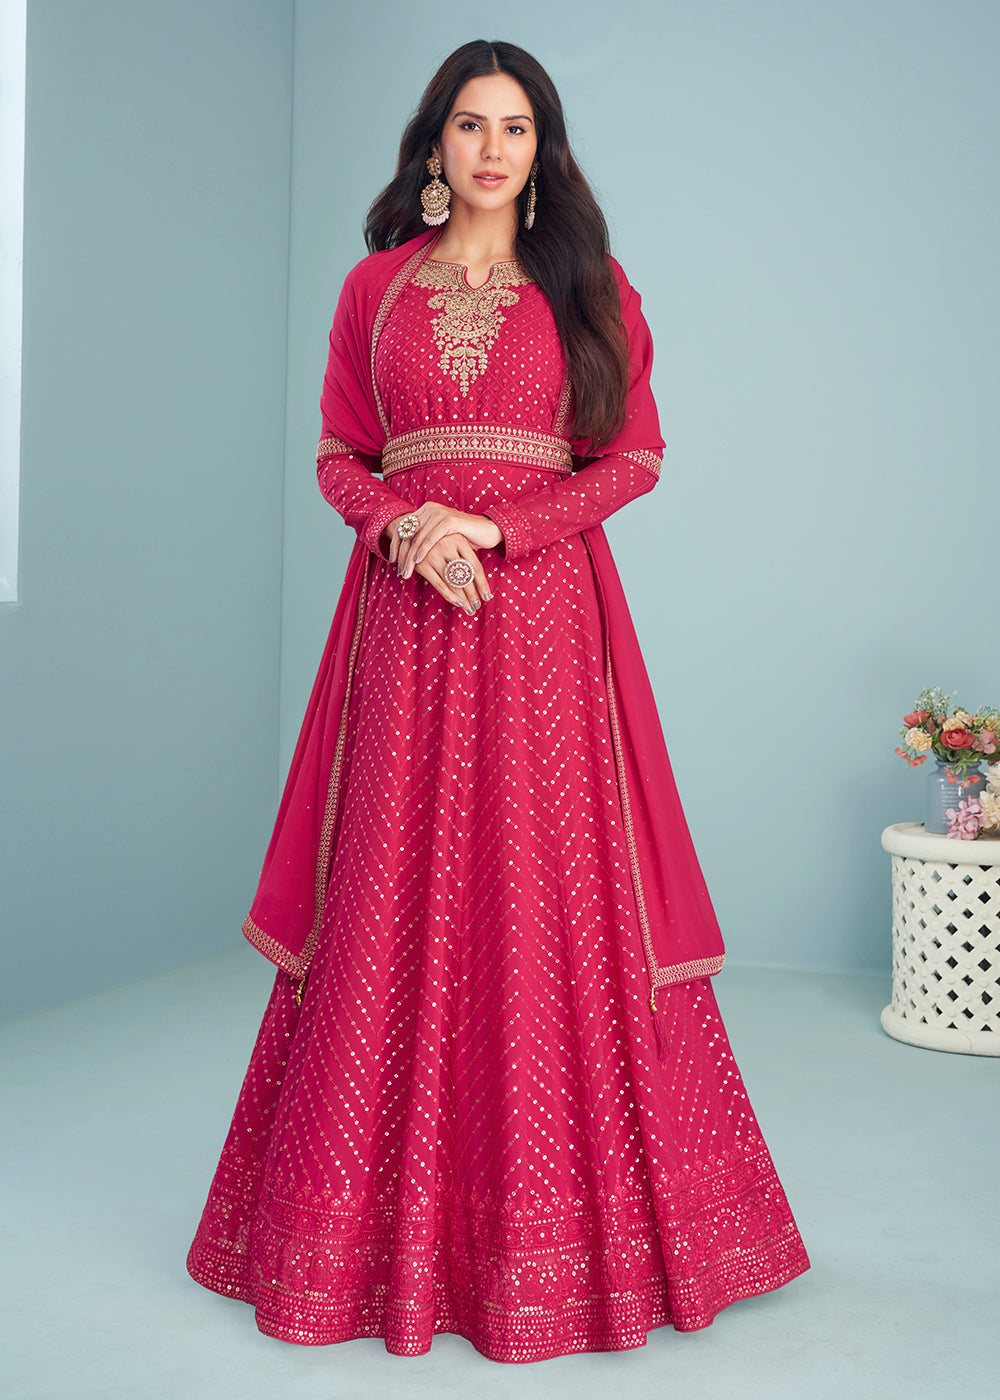 Buy Now Riveting Rani Pink Wedding Wear Designer Anarkali Suit Online in USA, UK, Australia, New Zealand, Canada & Worldwide at Empress Clothing.